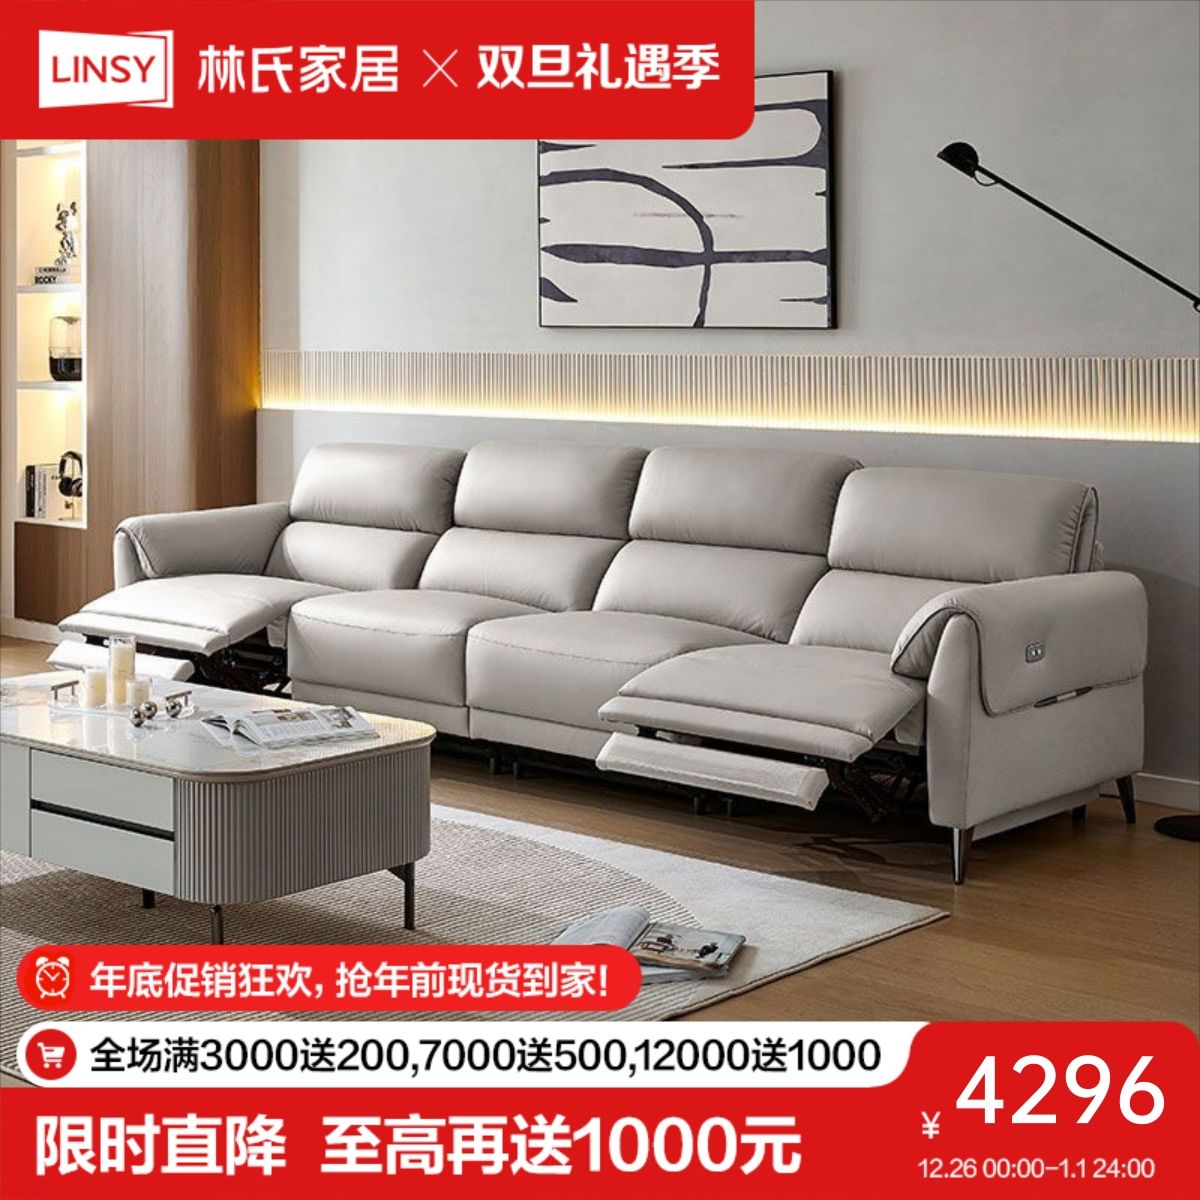 LINSY 林氏家居 林氏木业客厅现代简约科技布沙发电动功能沙发小户型G089 3940